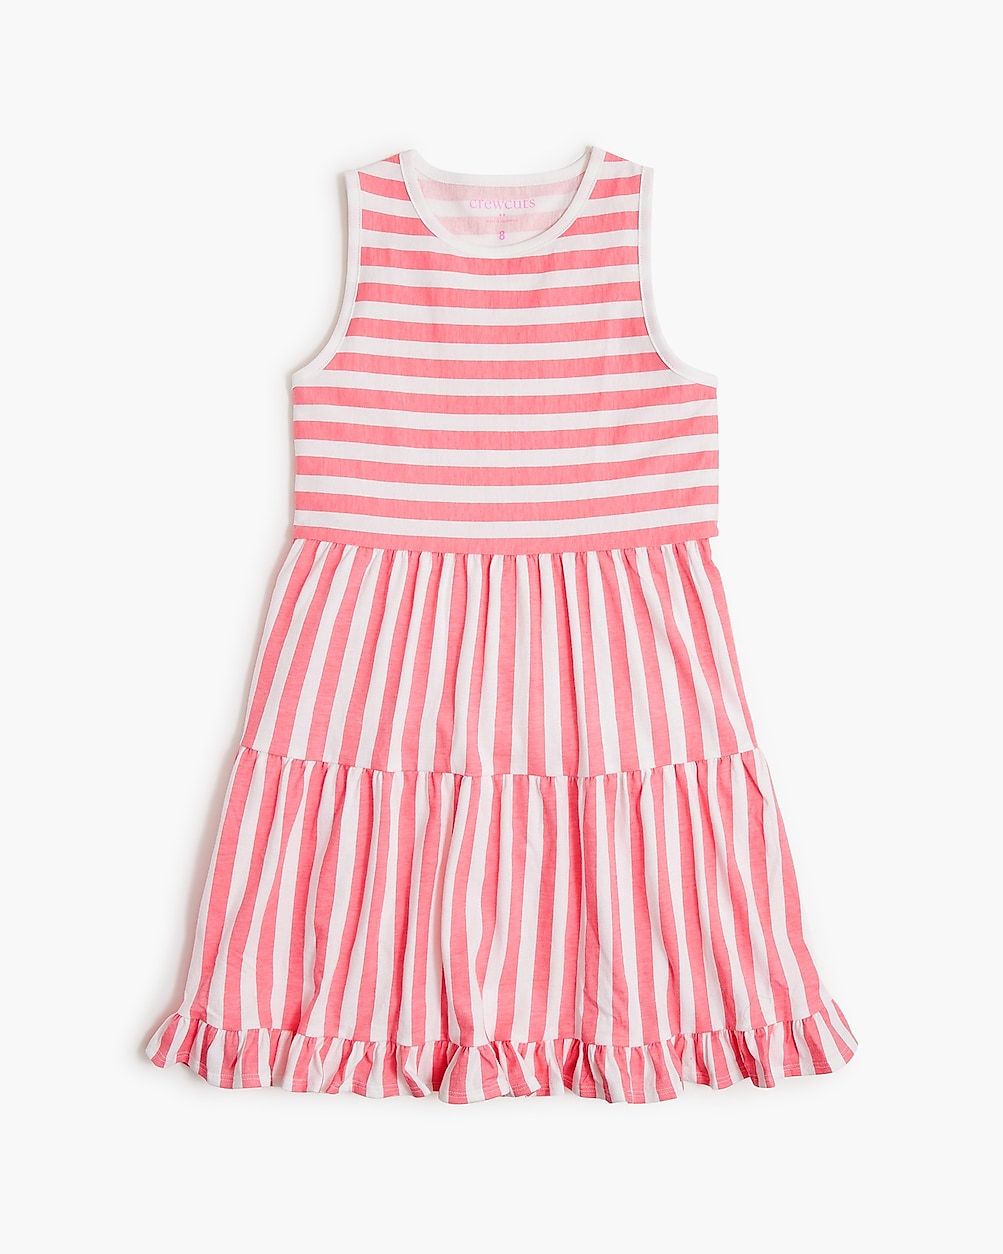 Girls' striped tank dress | J.Crew Factory